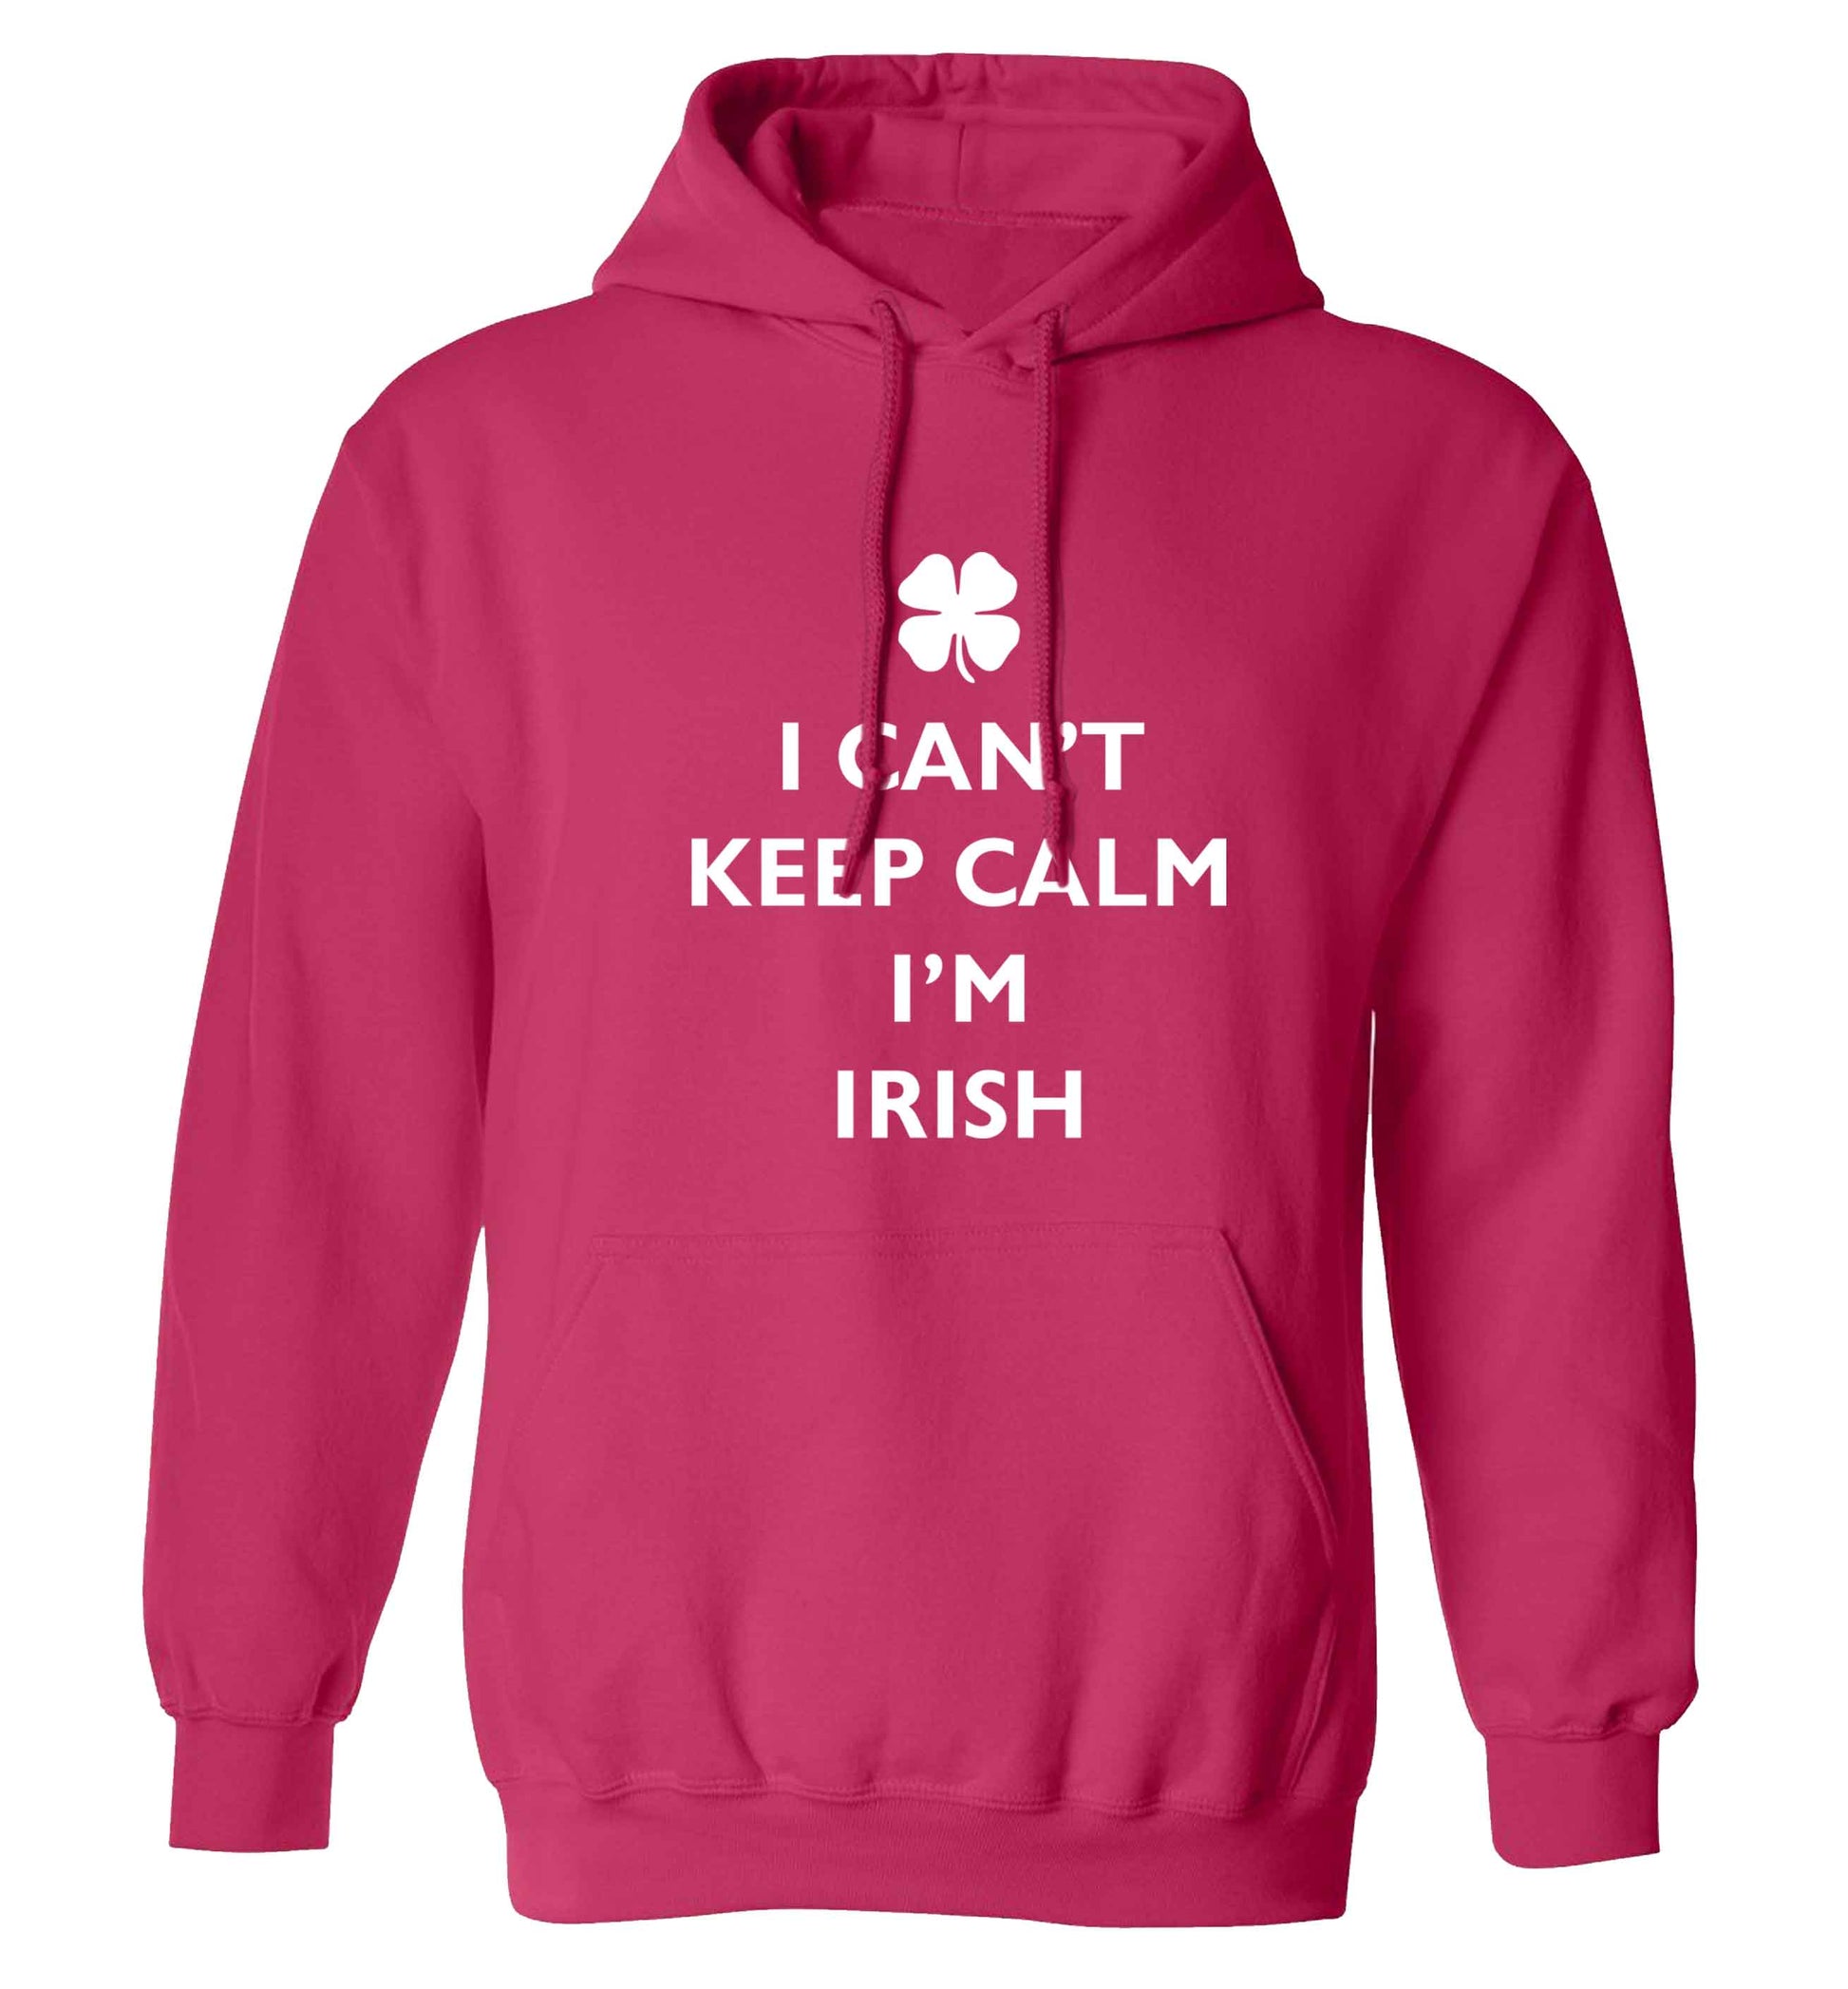 I can't keep calm I'm Irish adults unisex pink hoodie 2XL